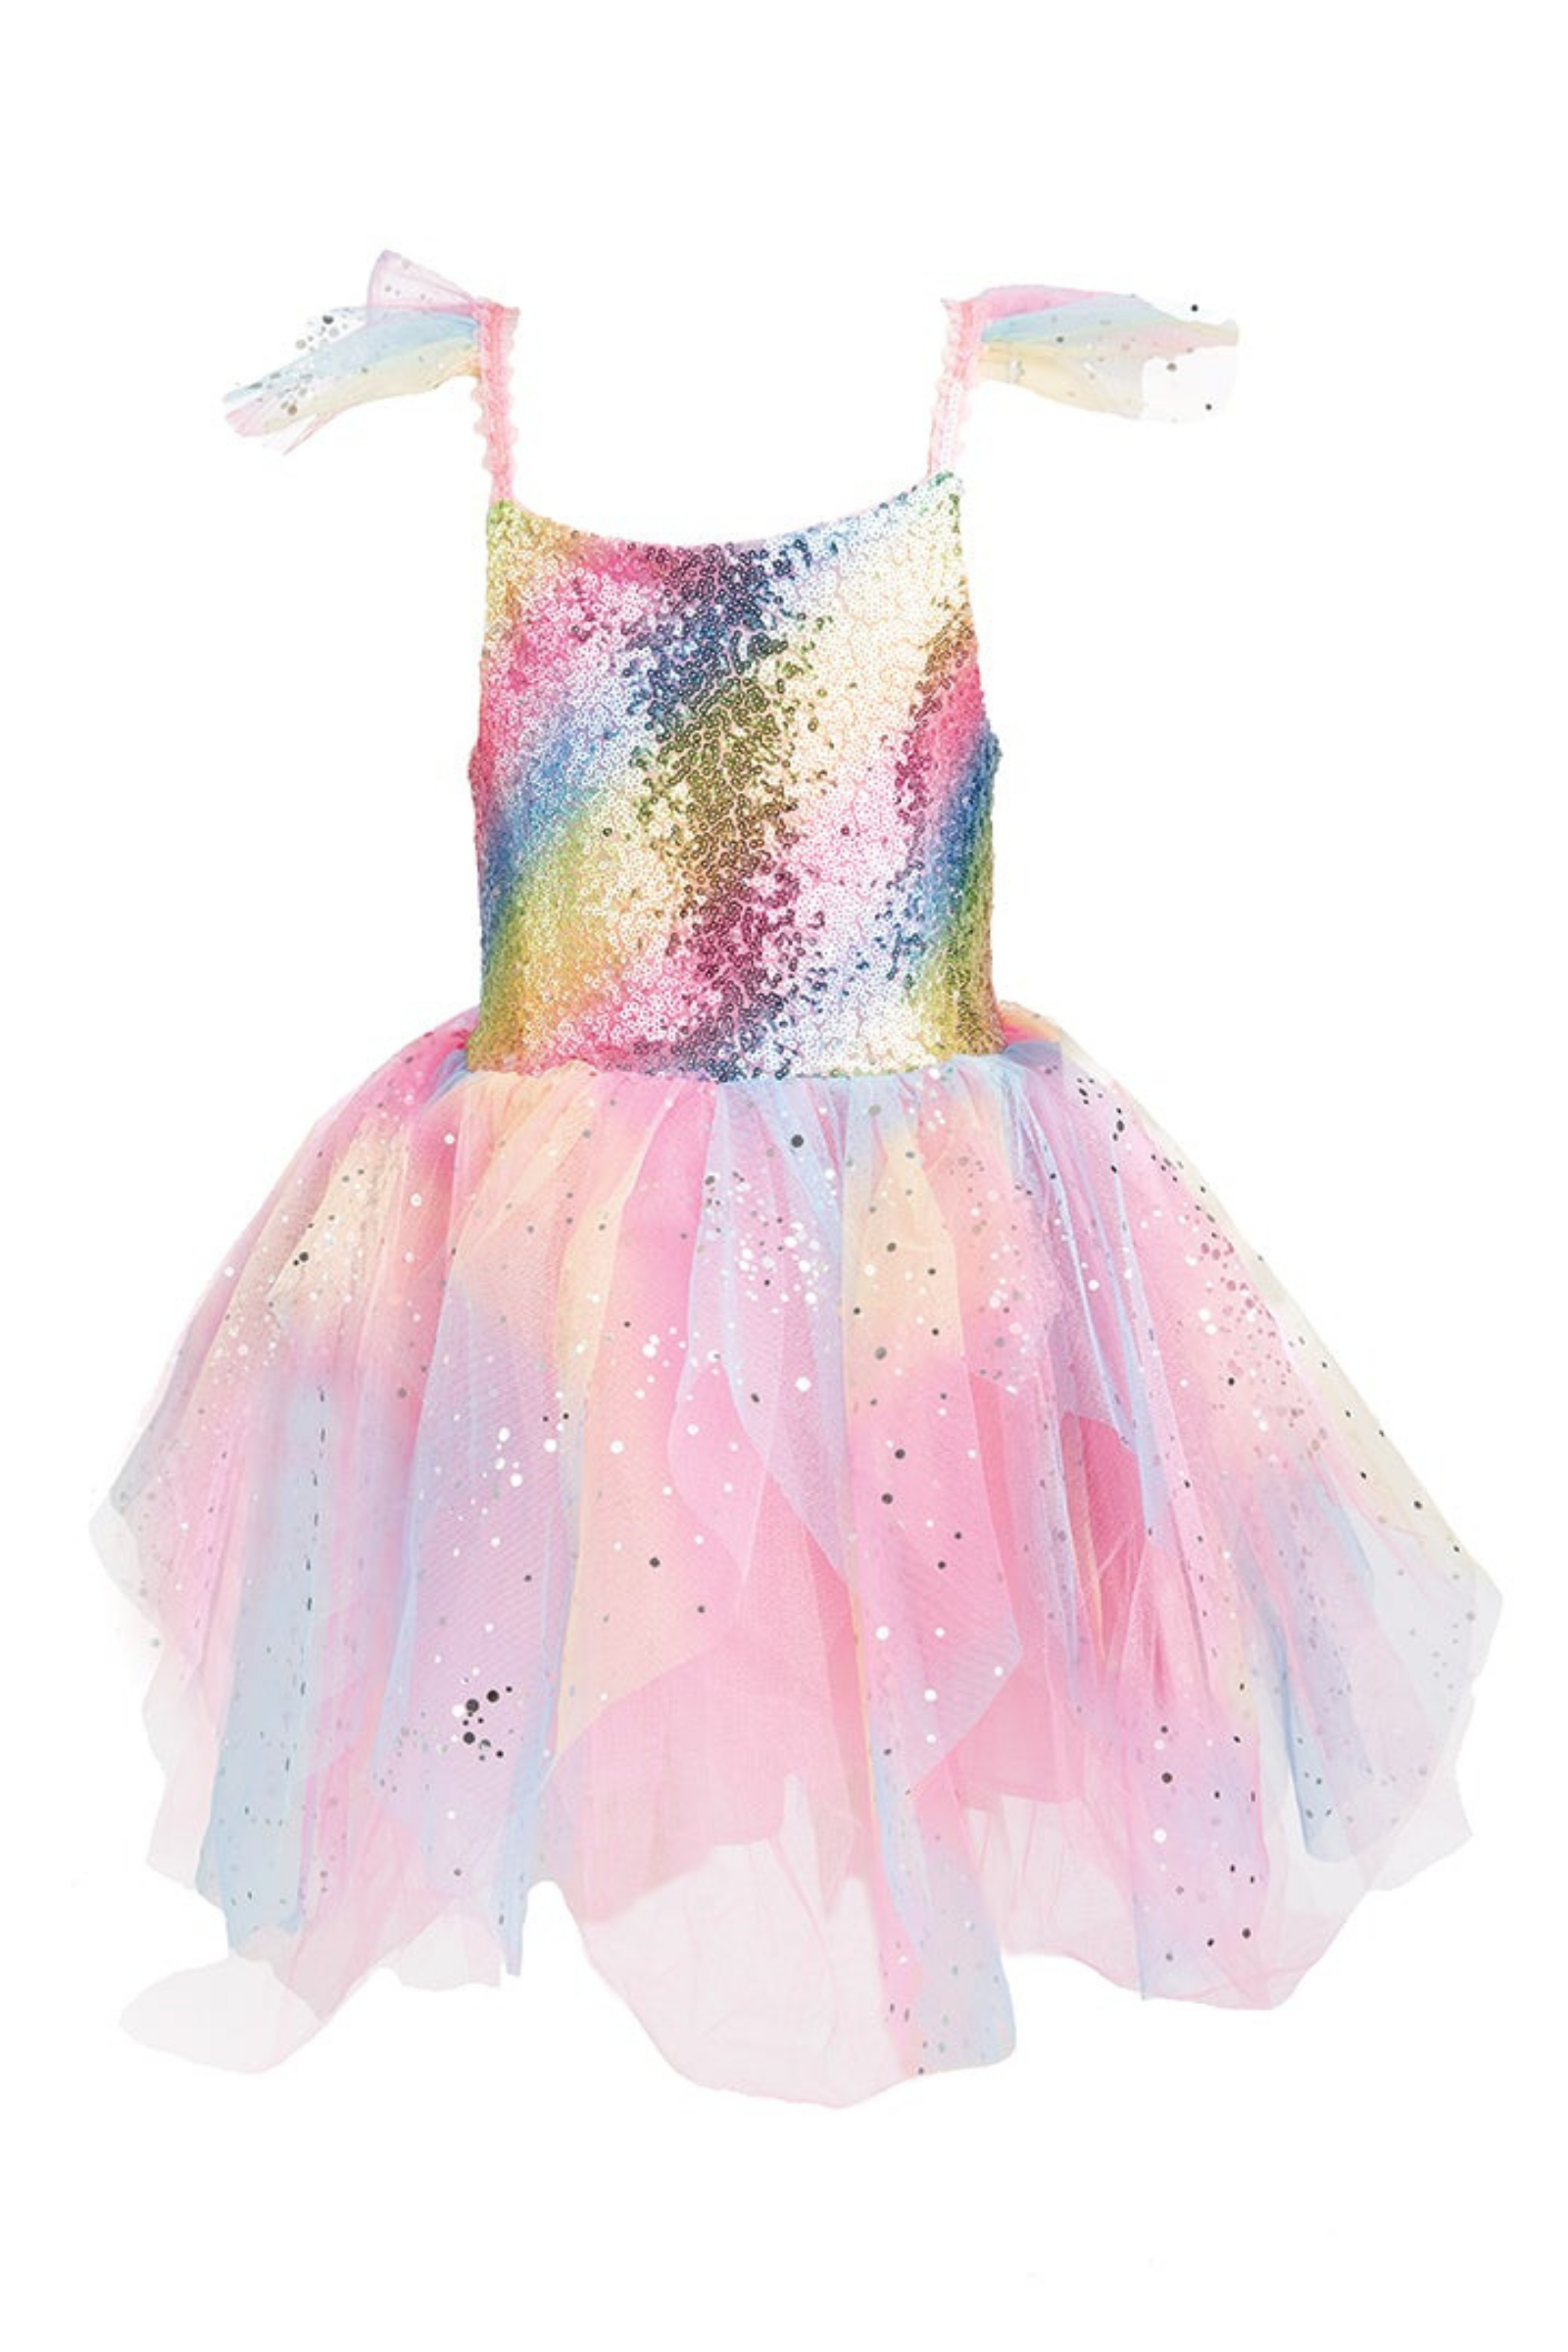 Rainbow Fairy Dress & Wings